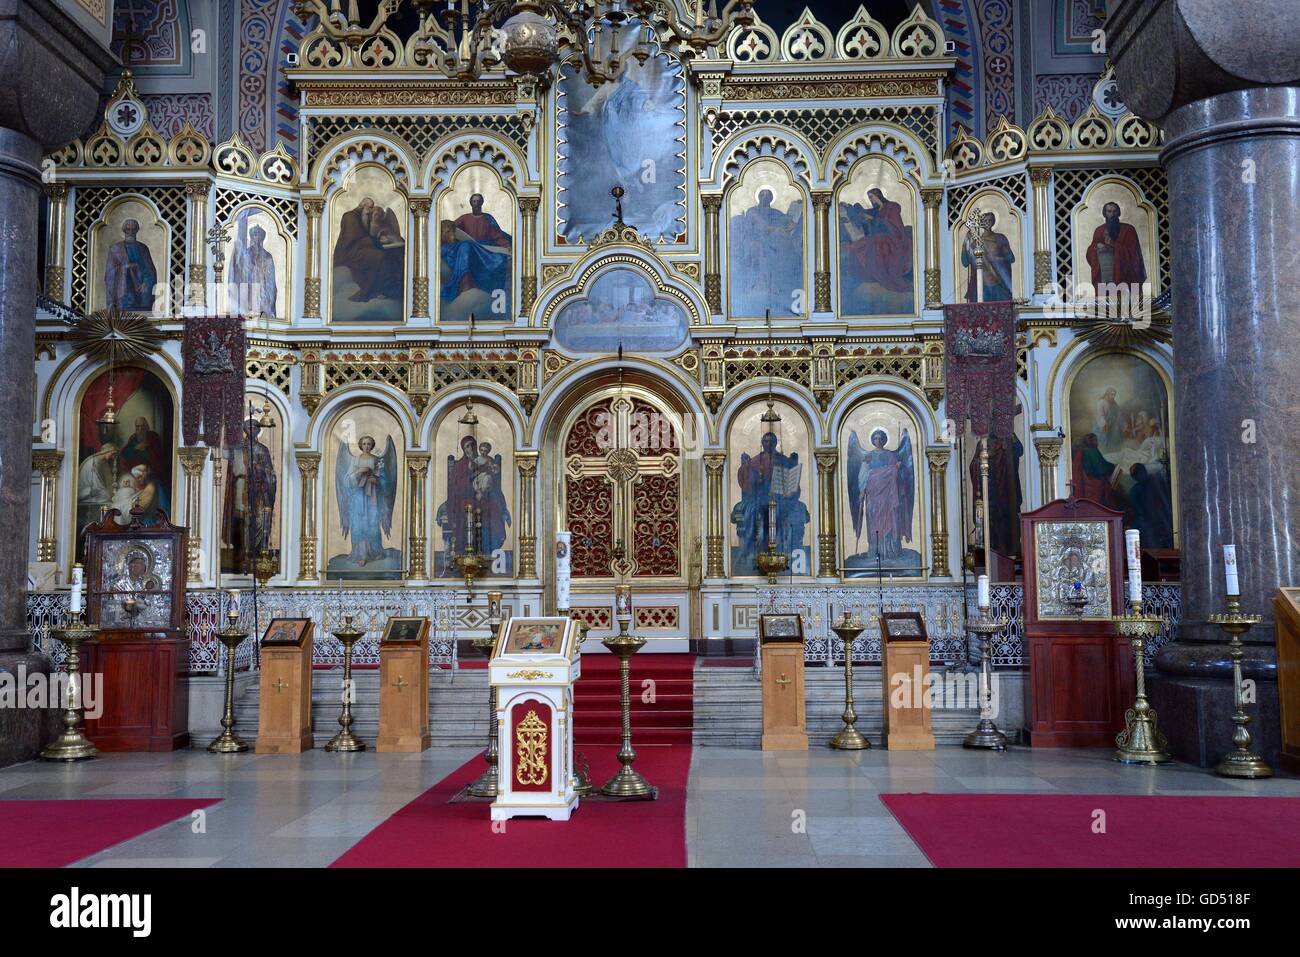 Russisch-orthodoxe Uspenski-Kathedrale, Innenraum, Altarraum mit Ikonostase, Altarrentabel, Sakralkunst, Helsinki, Finnland, Europa Foto Stock